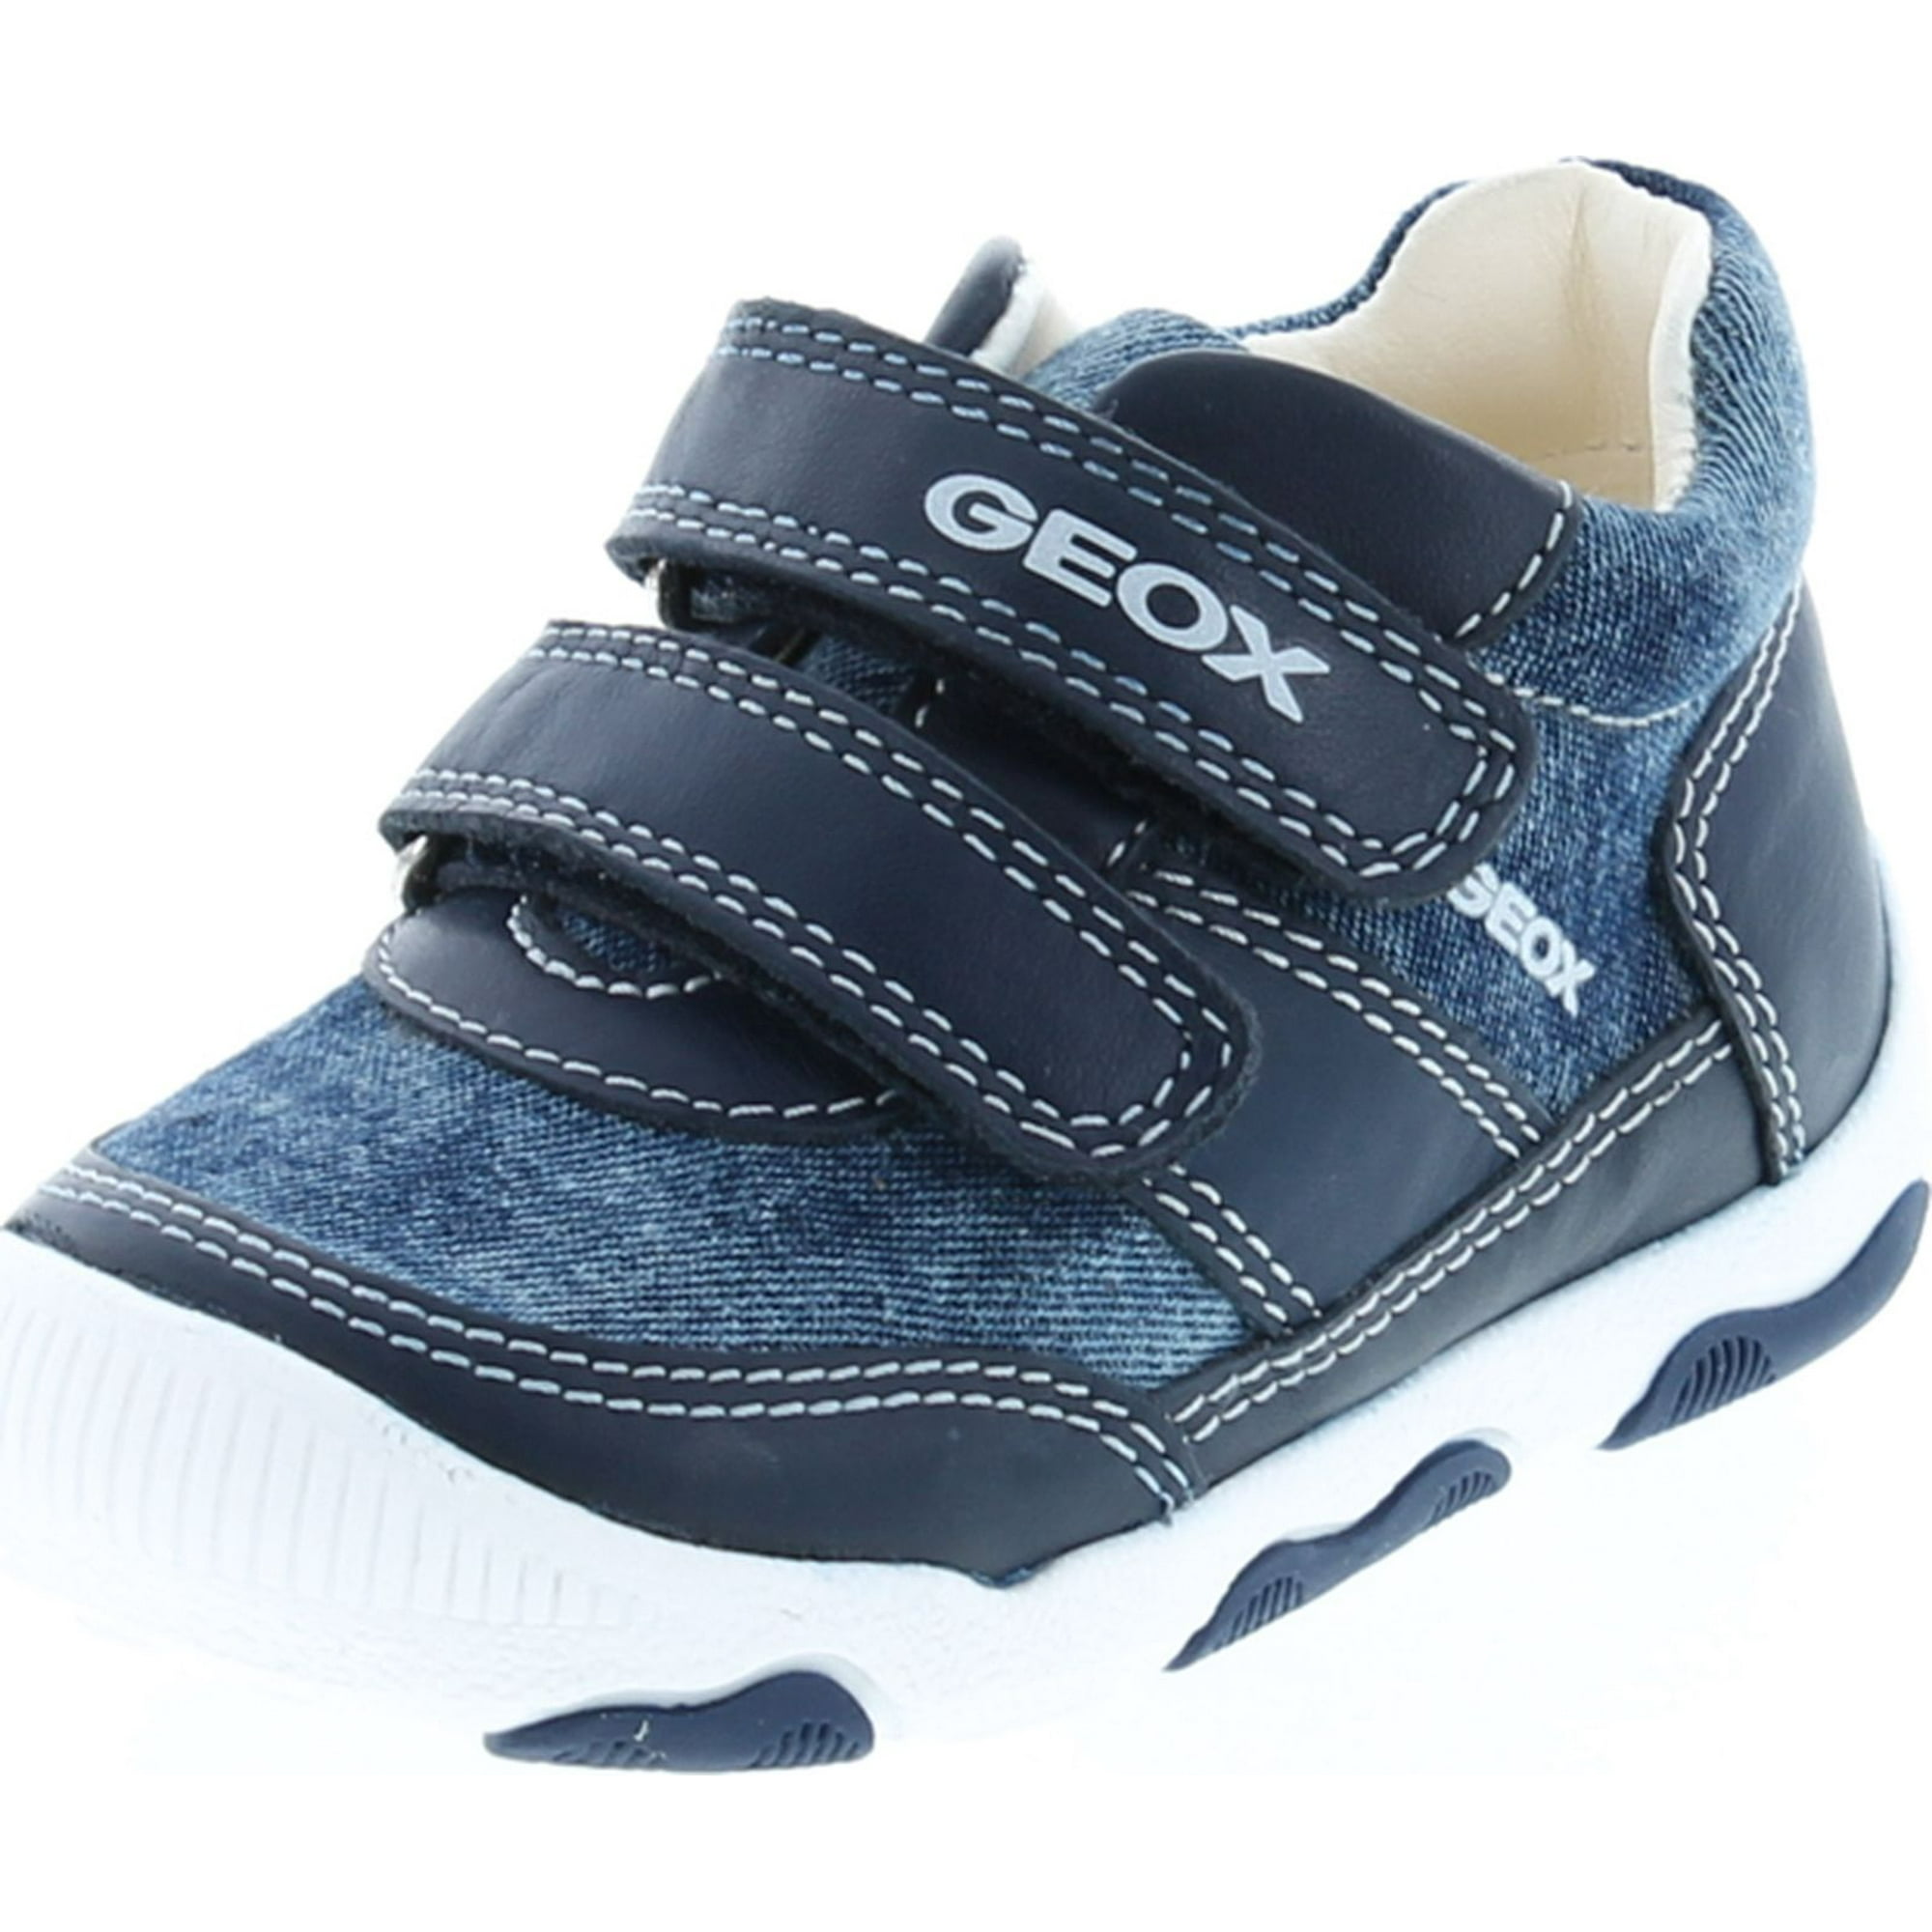 stil gips kampagne Geox Boys Baby Balu Fashion Sneakers, Navy/Royal, 22 - Walmart.com